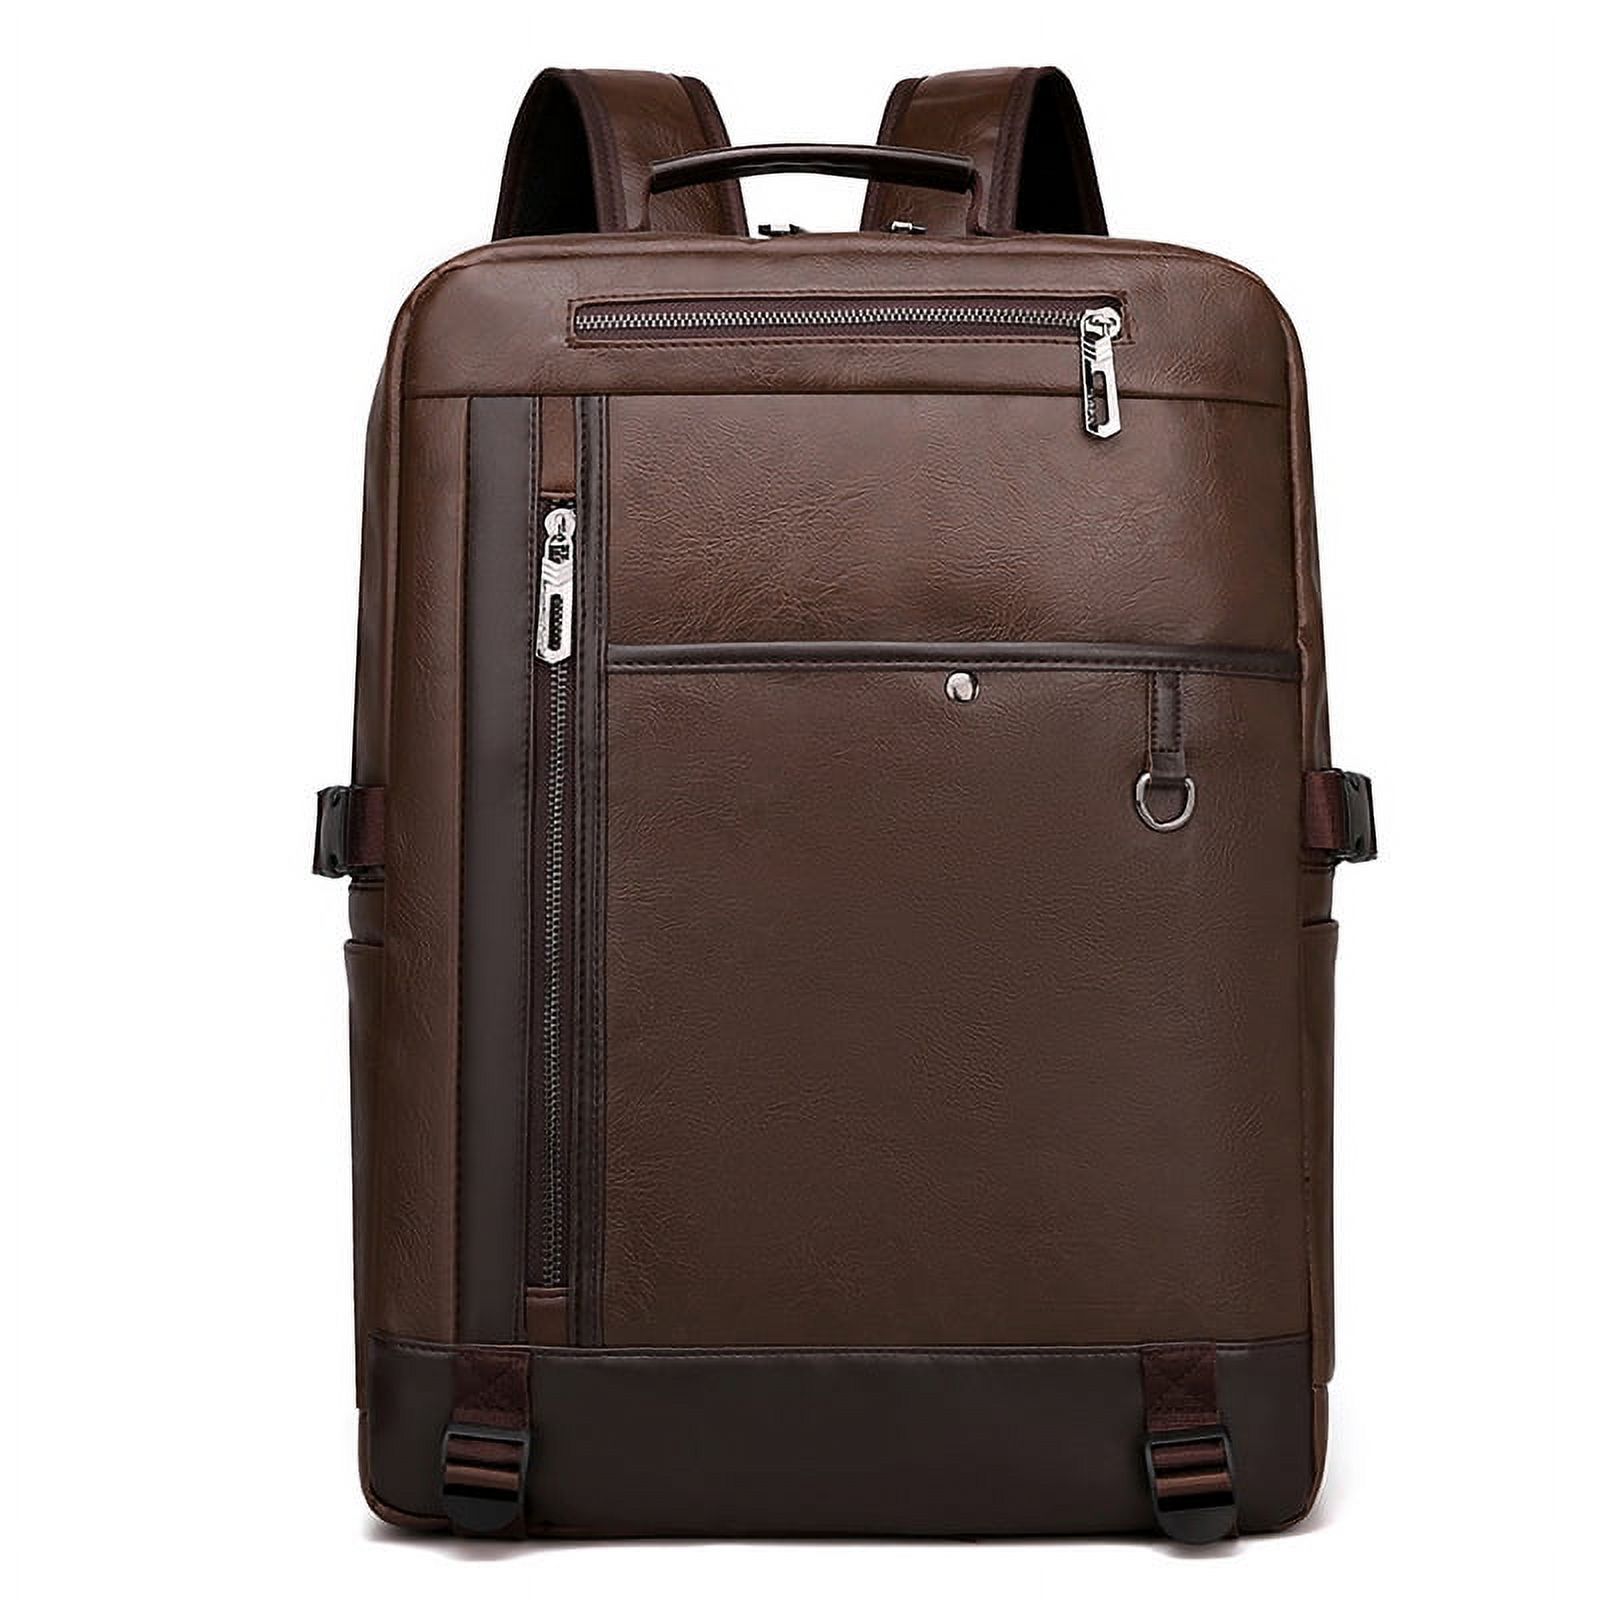 Toyella Summer New Trend Backpack Men's Business Travel Backpack Fashion Computer Bag Khaki - image 3 of 5